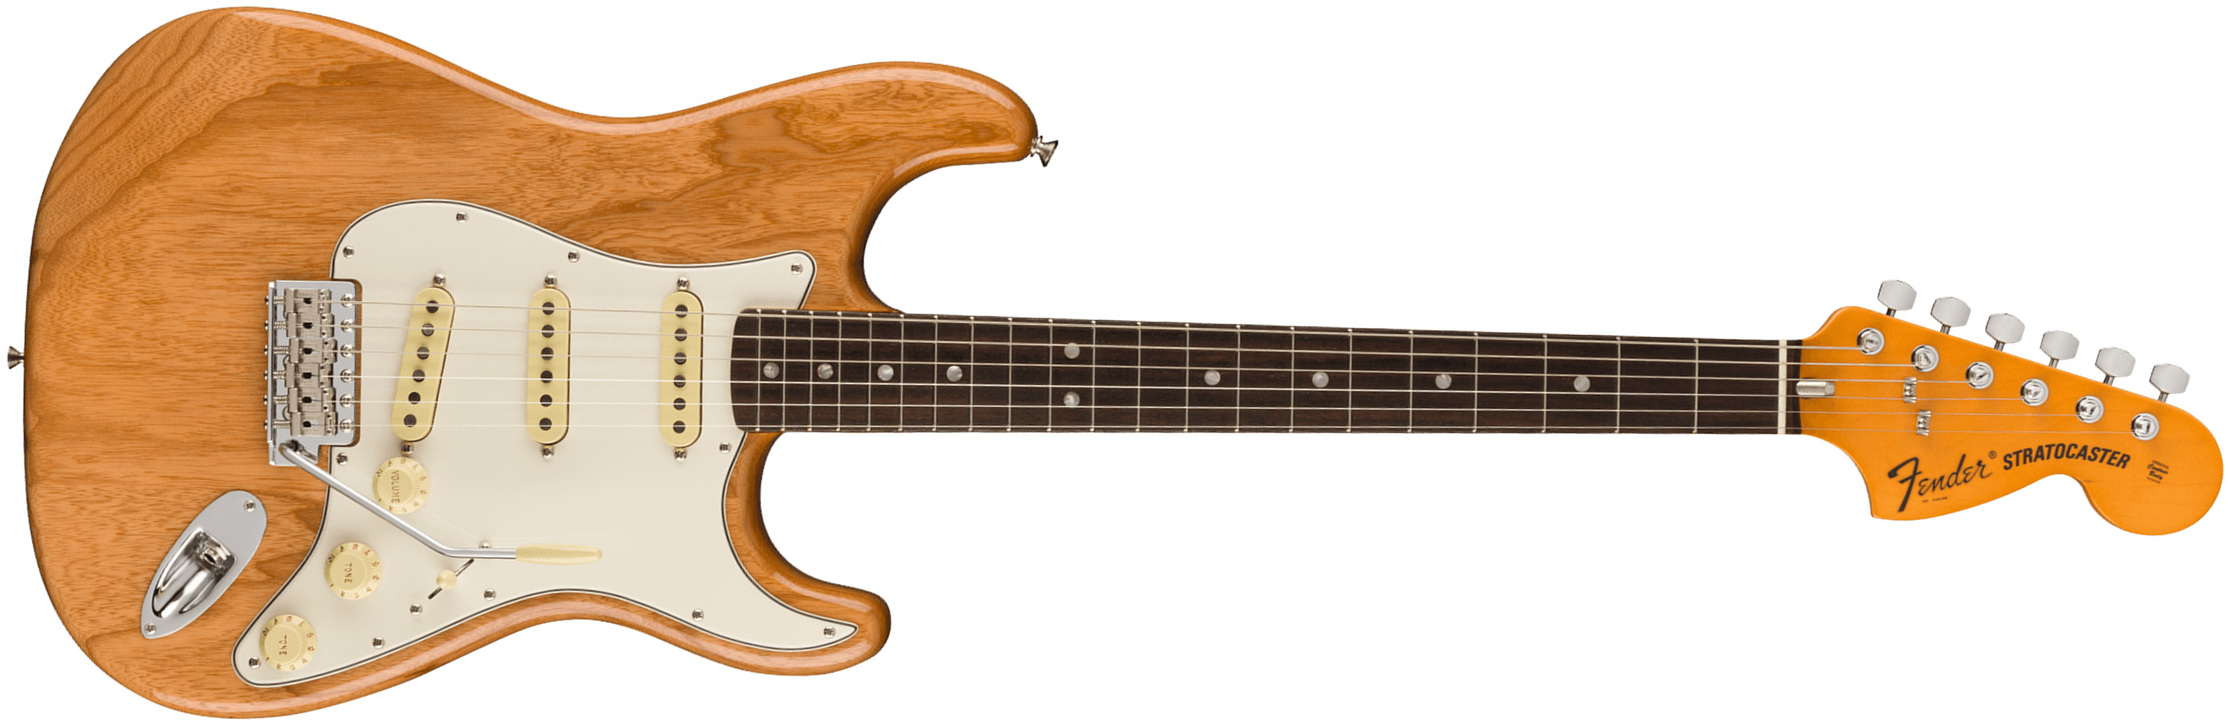 Fender Strat 1973 American Vintage Ii Usa 3s Trem Rw - Aged Natural - Guitare Électrique Forme Str - Main picture